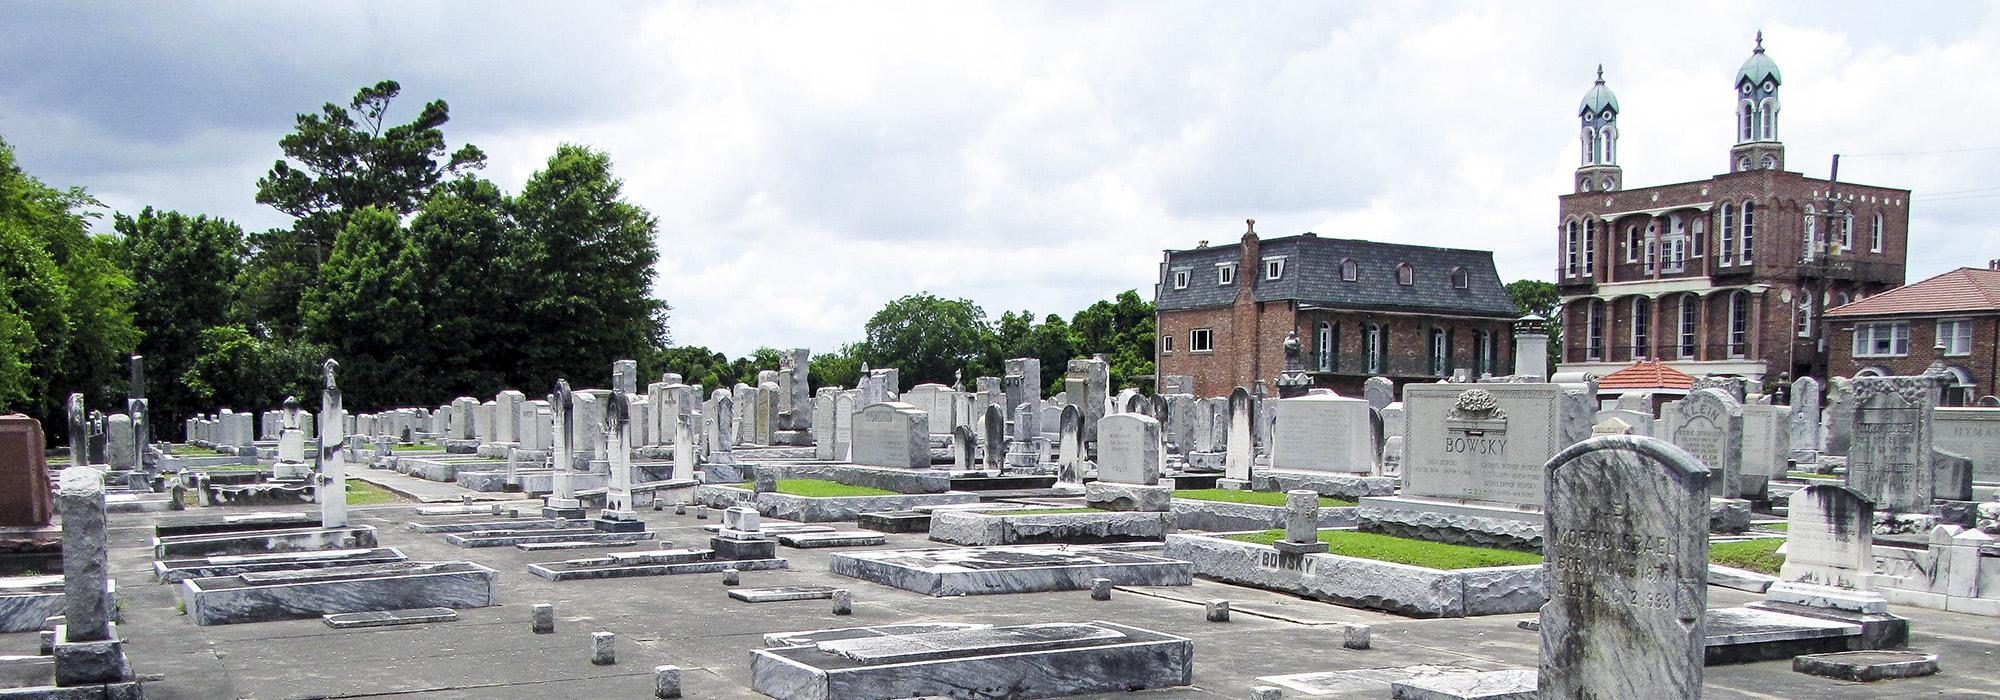 Gates of Prayer Cemetery, New Orleans, LA